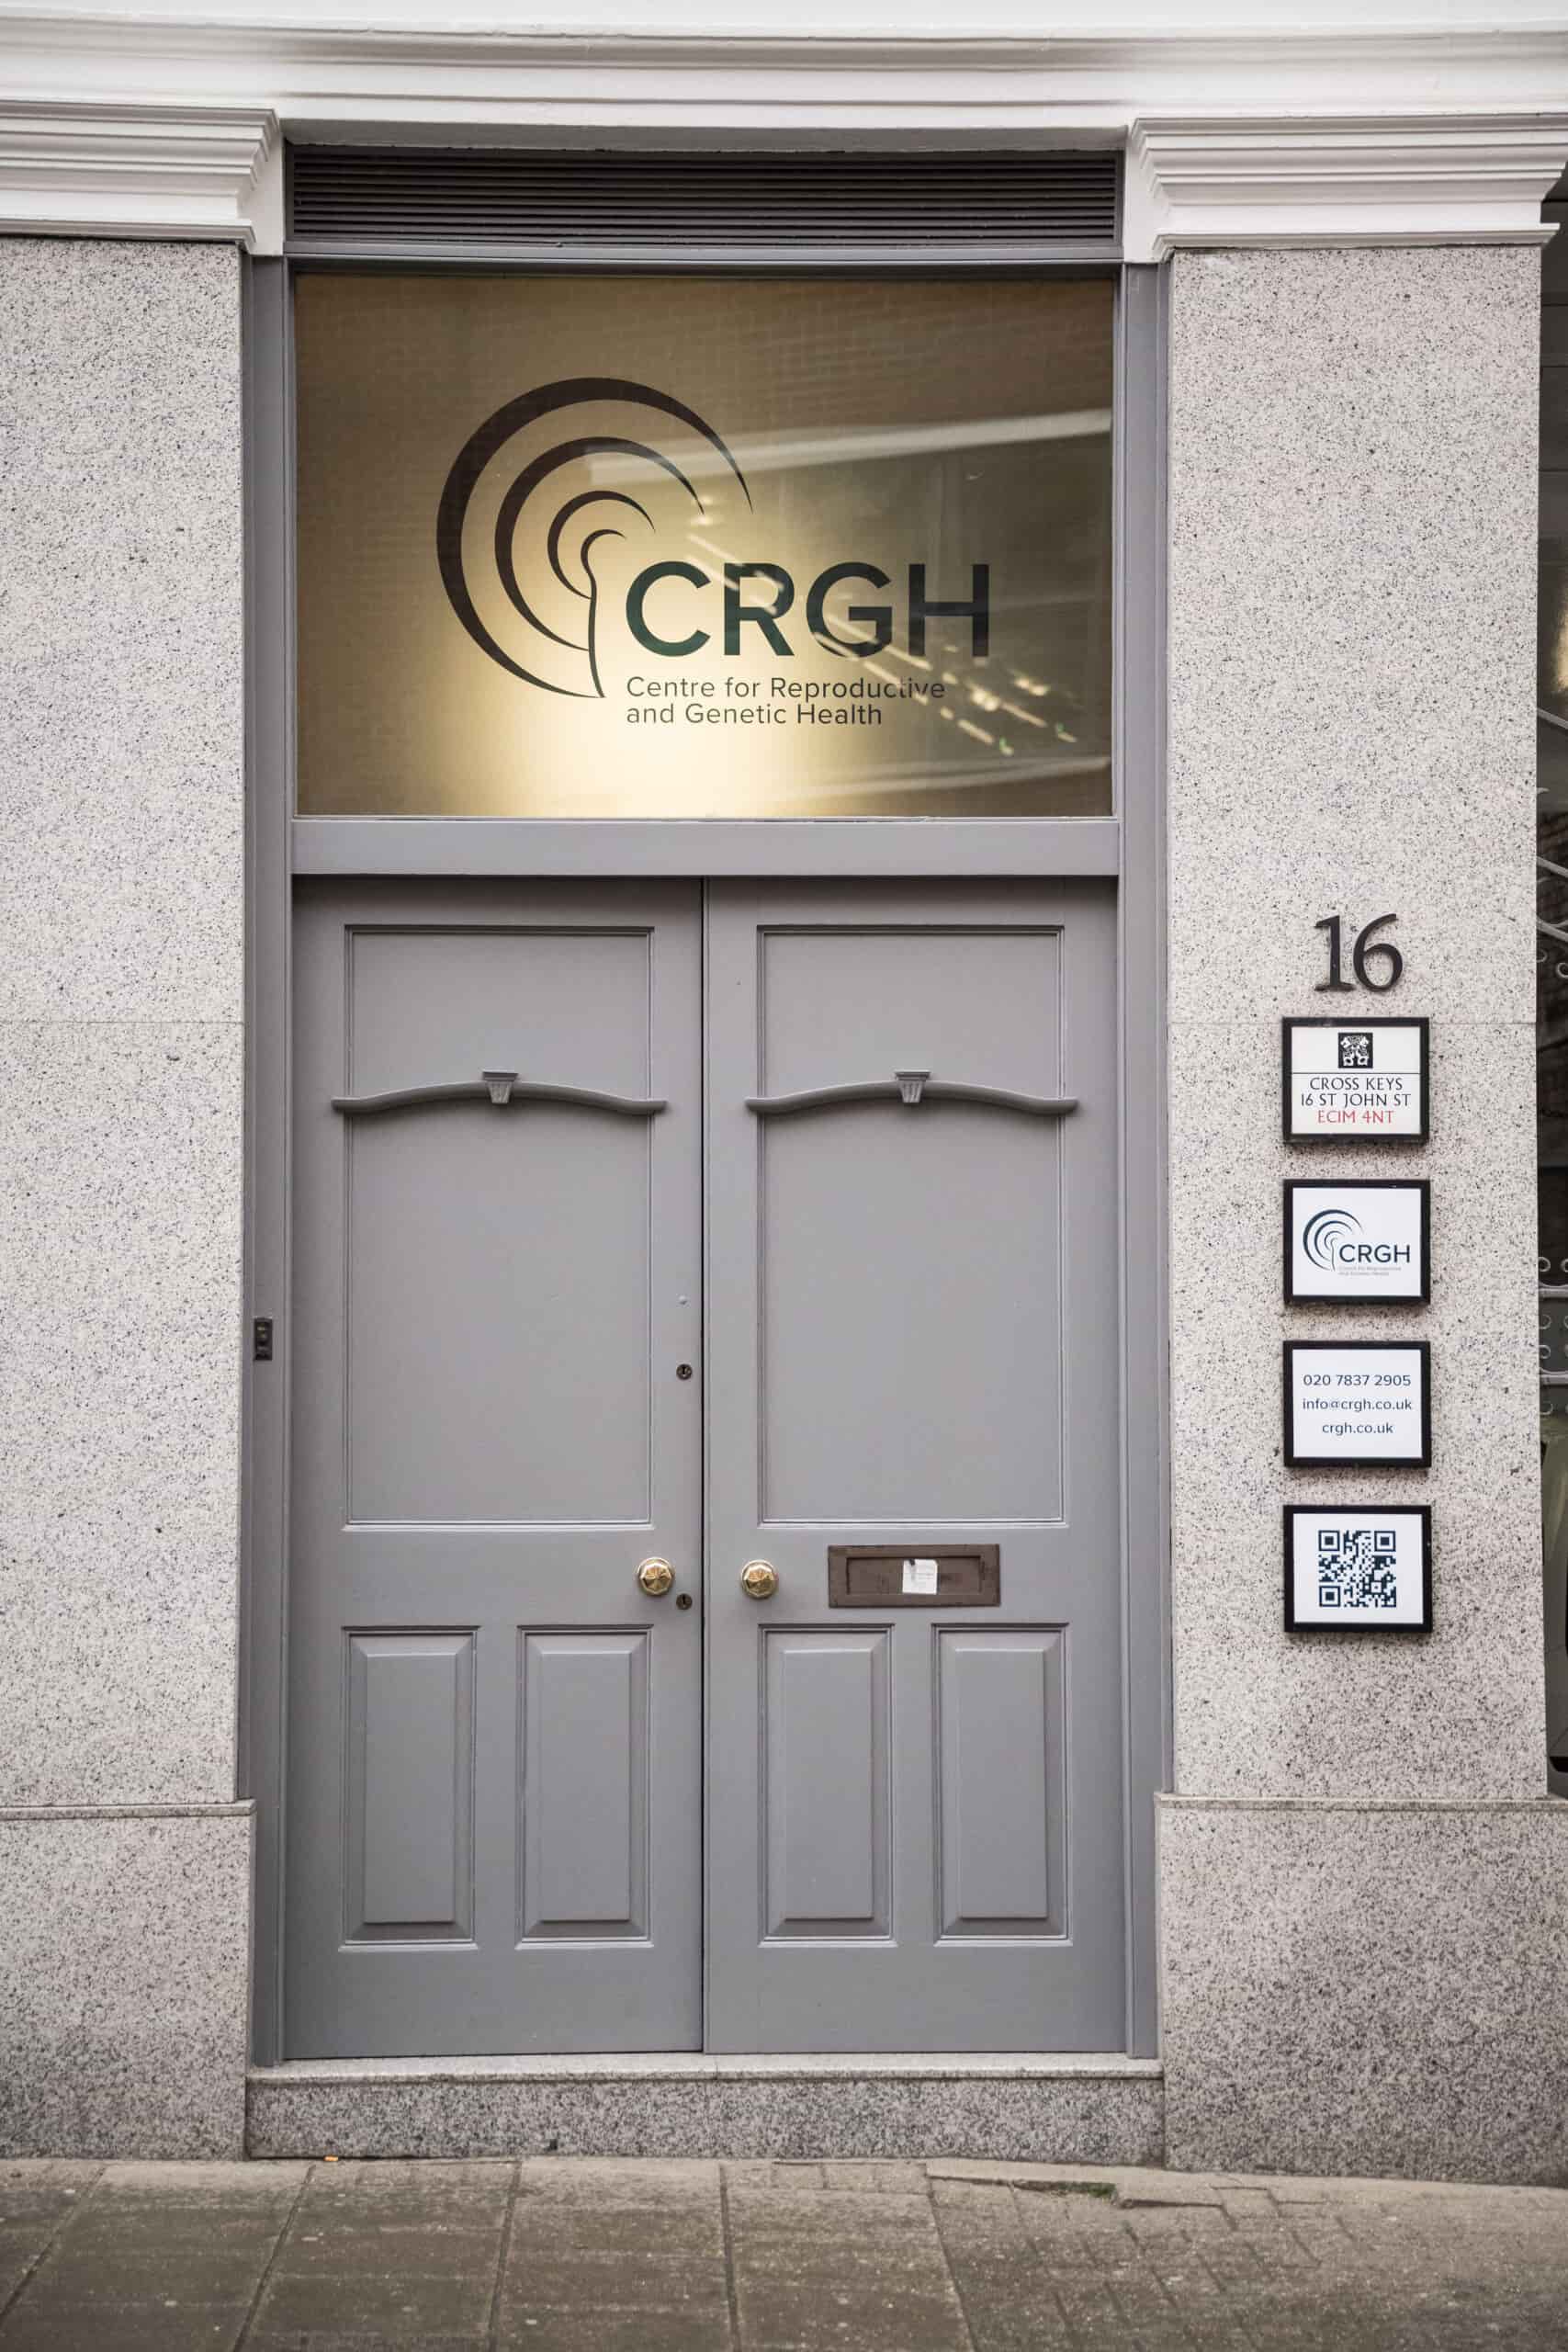 The front door of the CRGH office building.